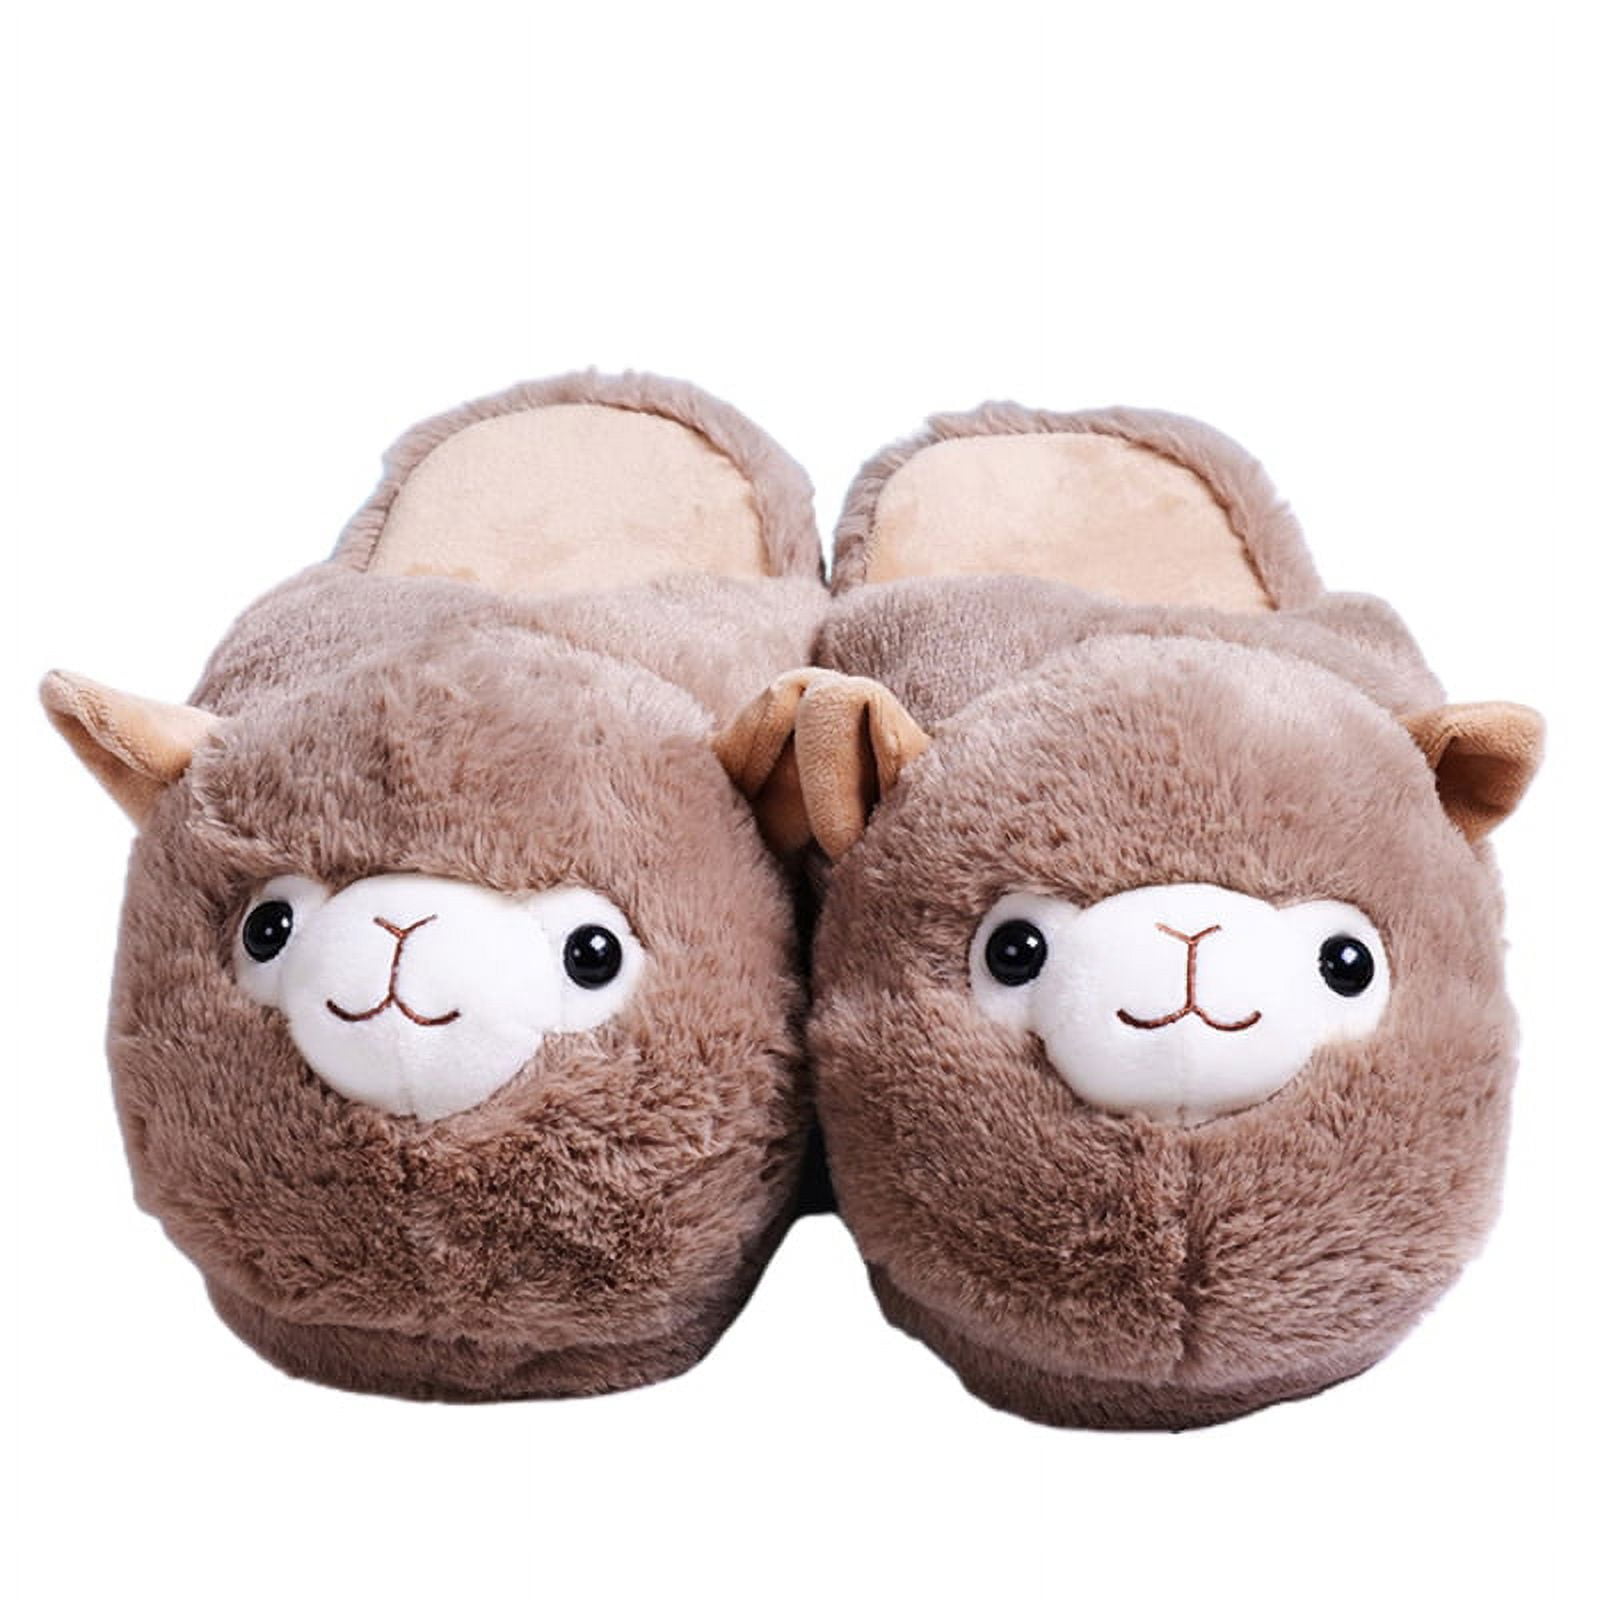 Handmade genuine alpaca slippers | Alpaca slippers, Soft slippers, Slippers  shop